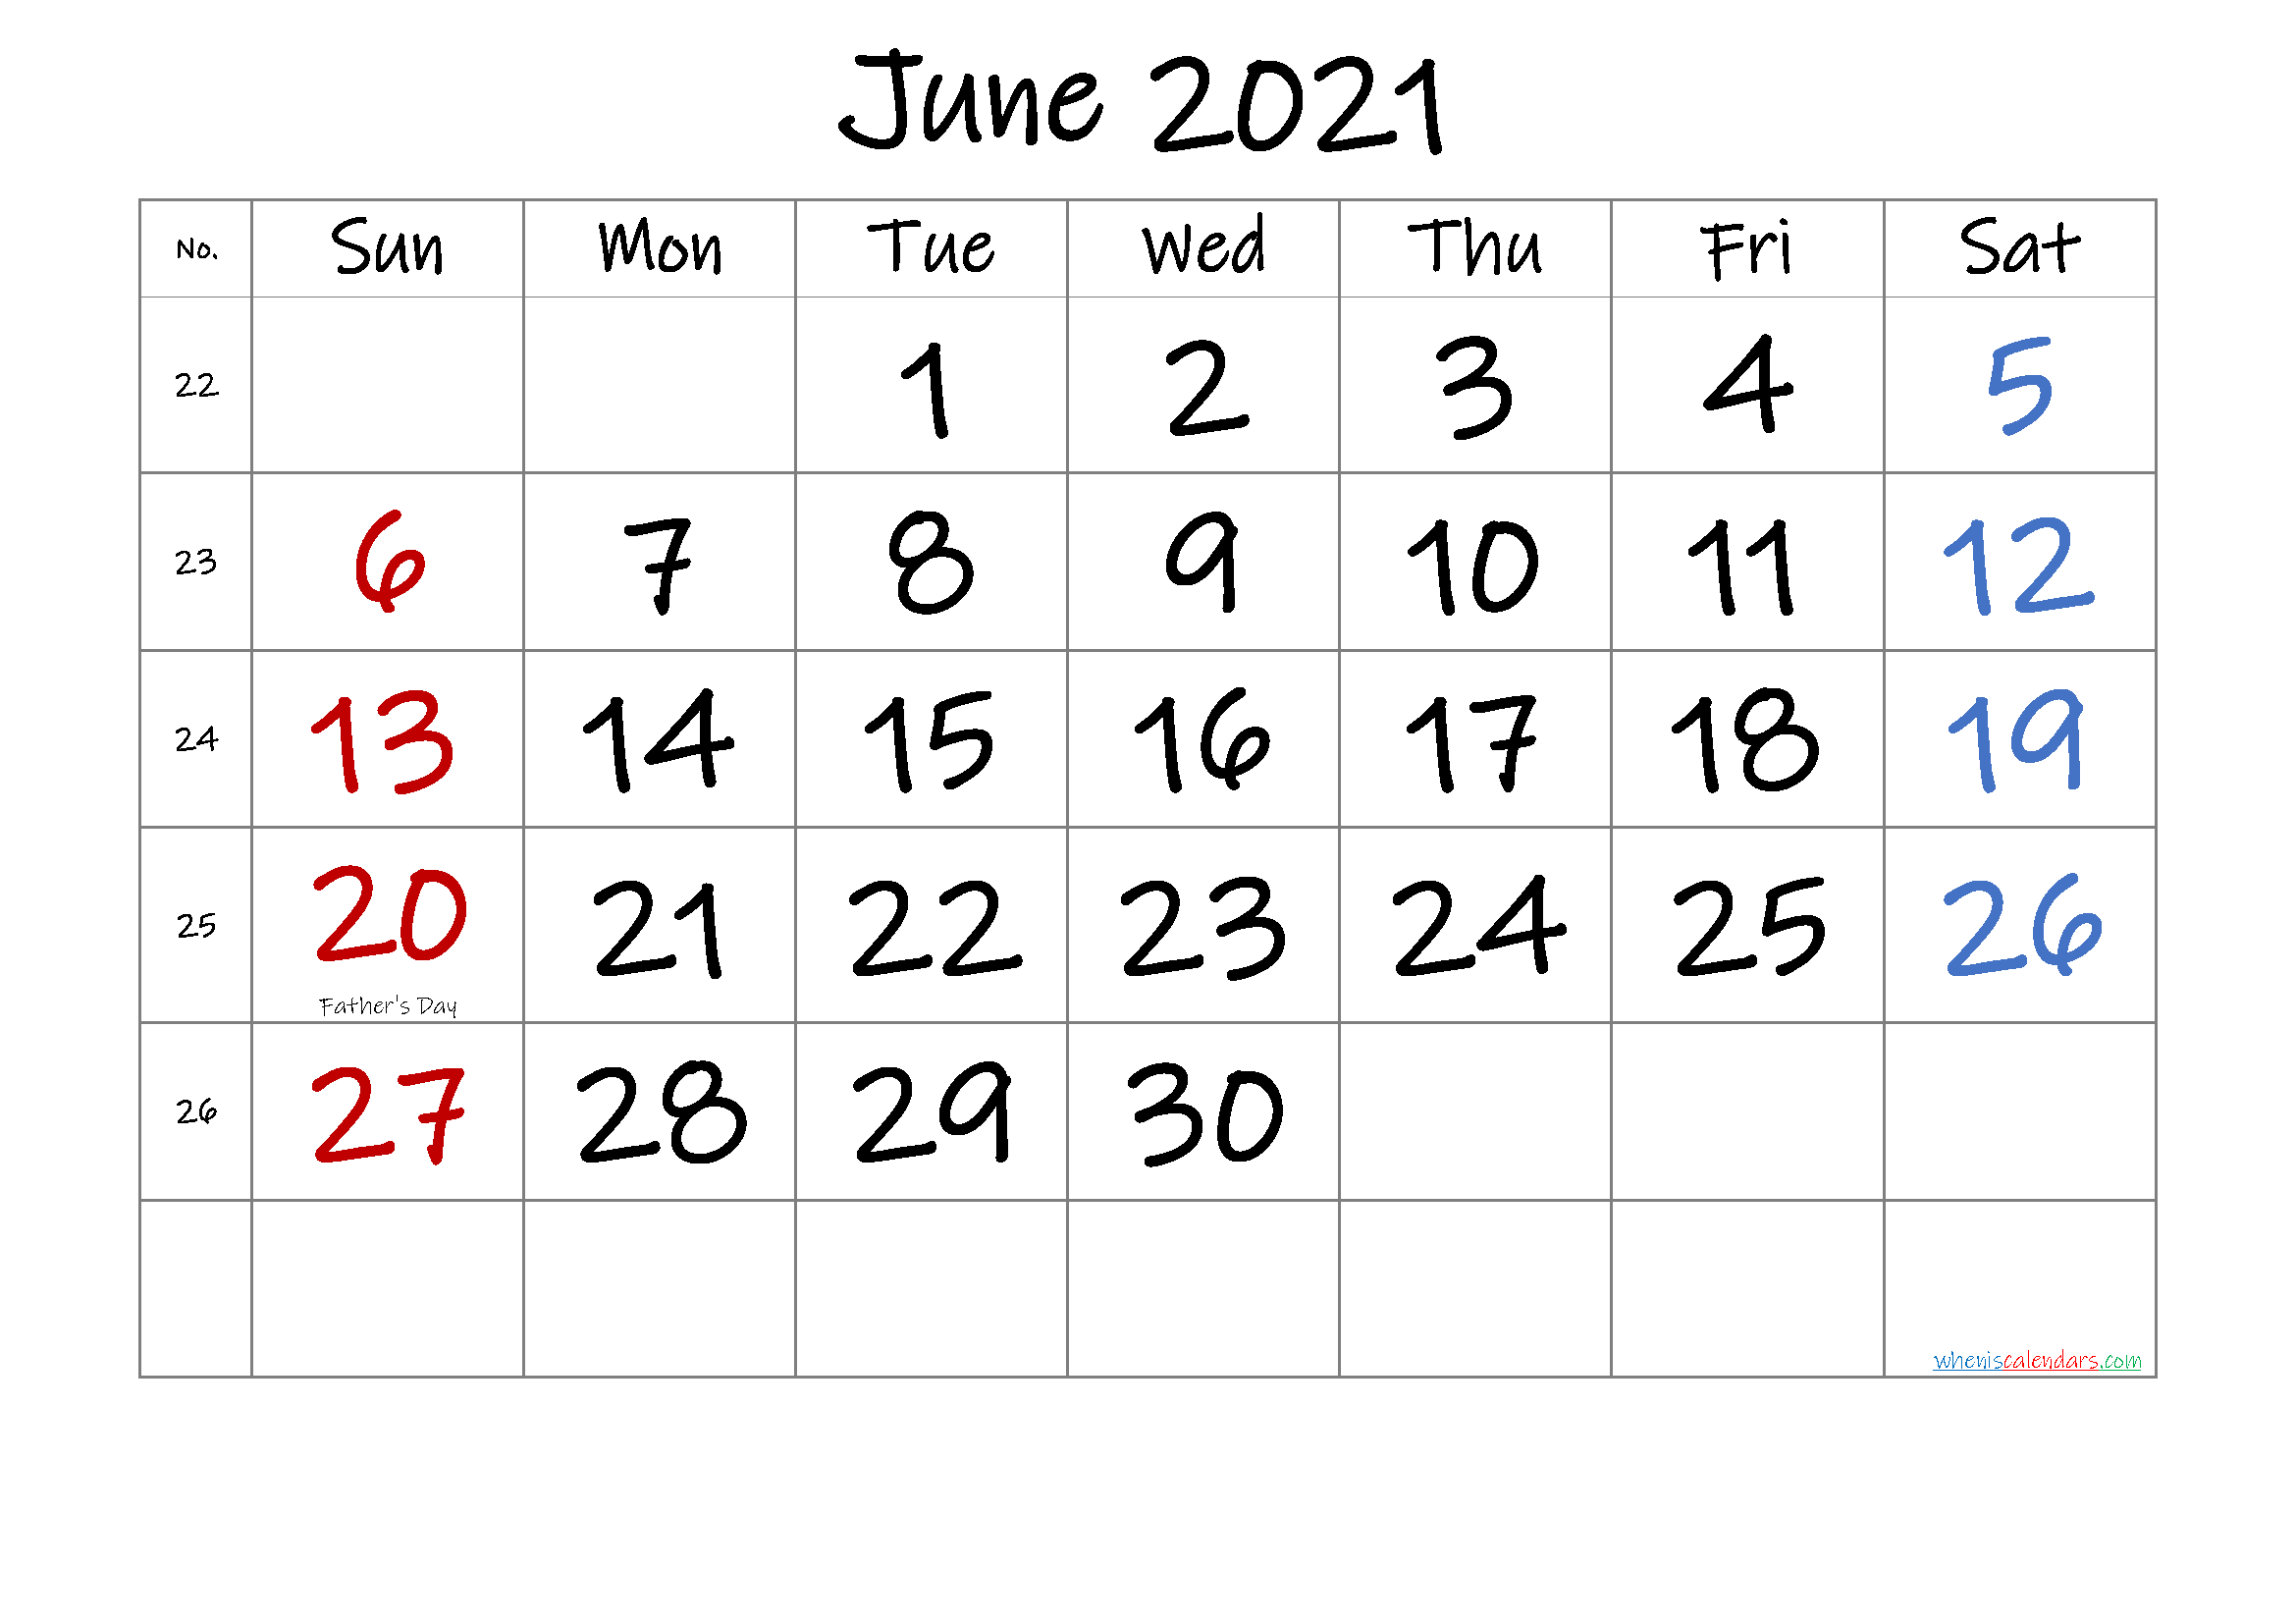 JUNE 2021 Printable Calendar with Holidays